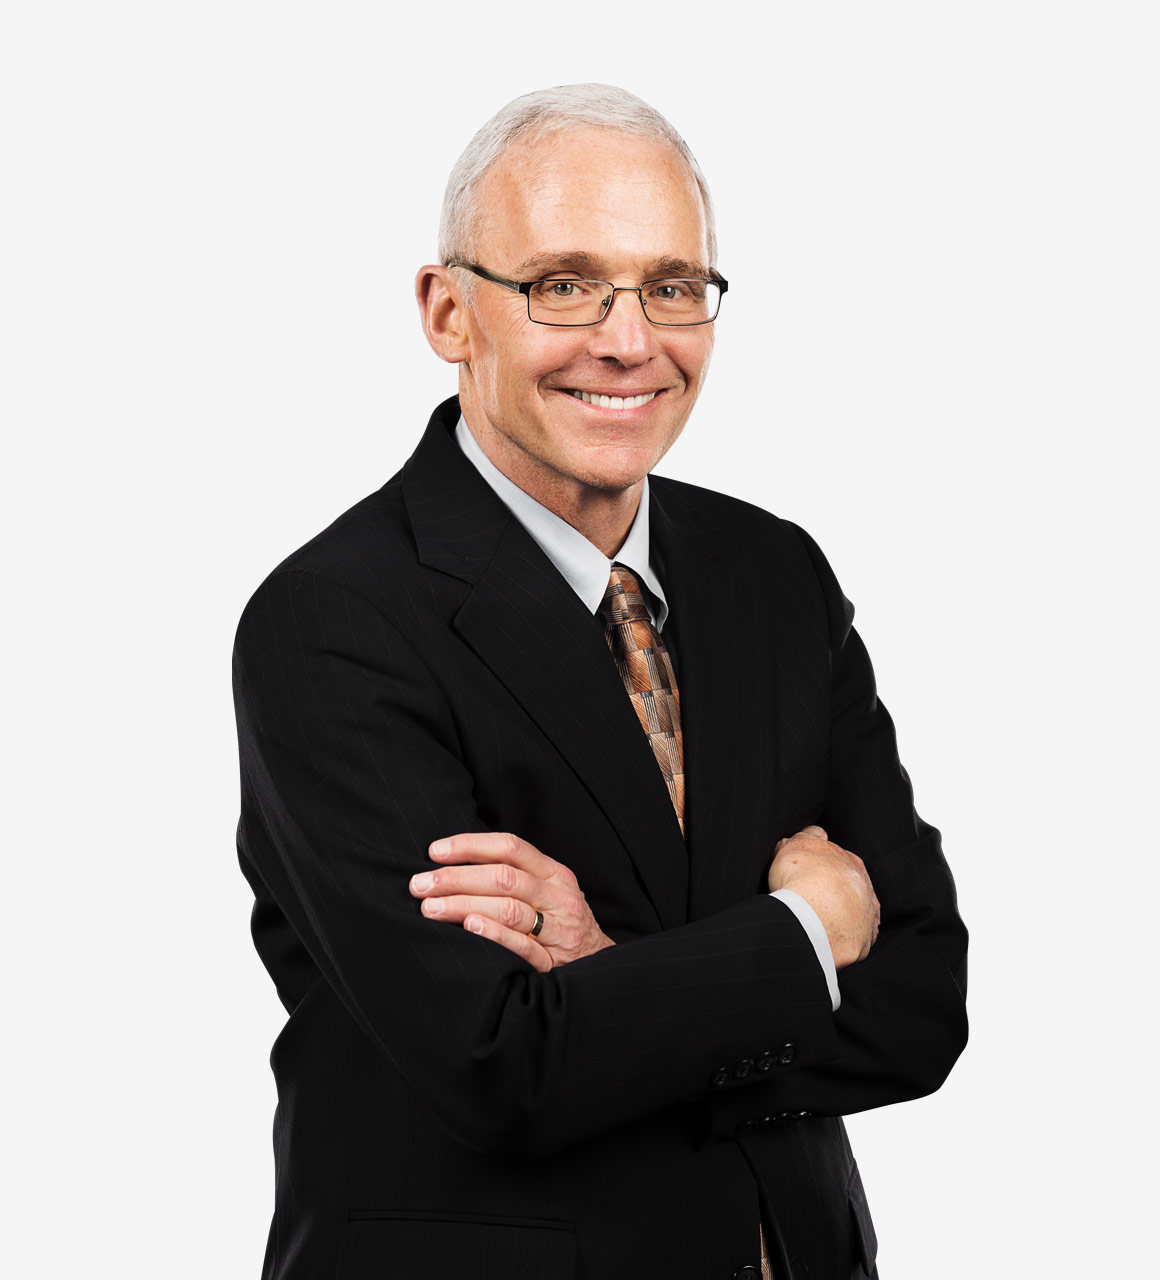 Marc Fleischaker, Chairman Emeritus at Arent Fox